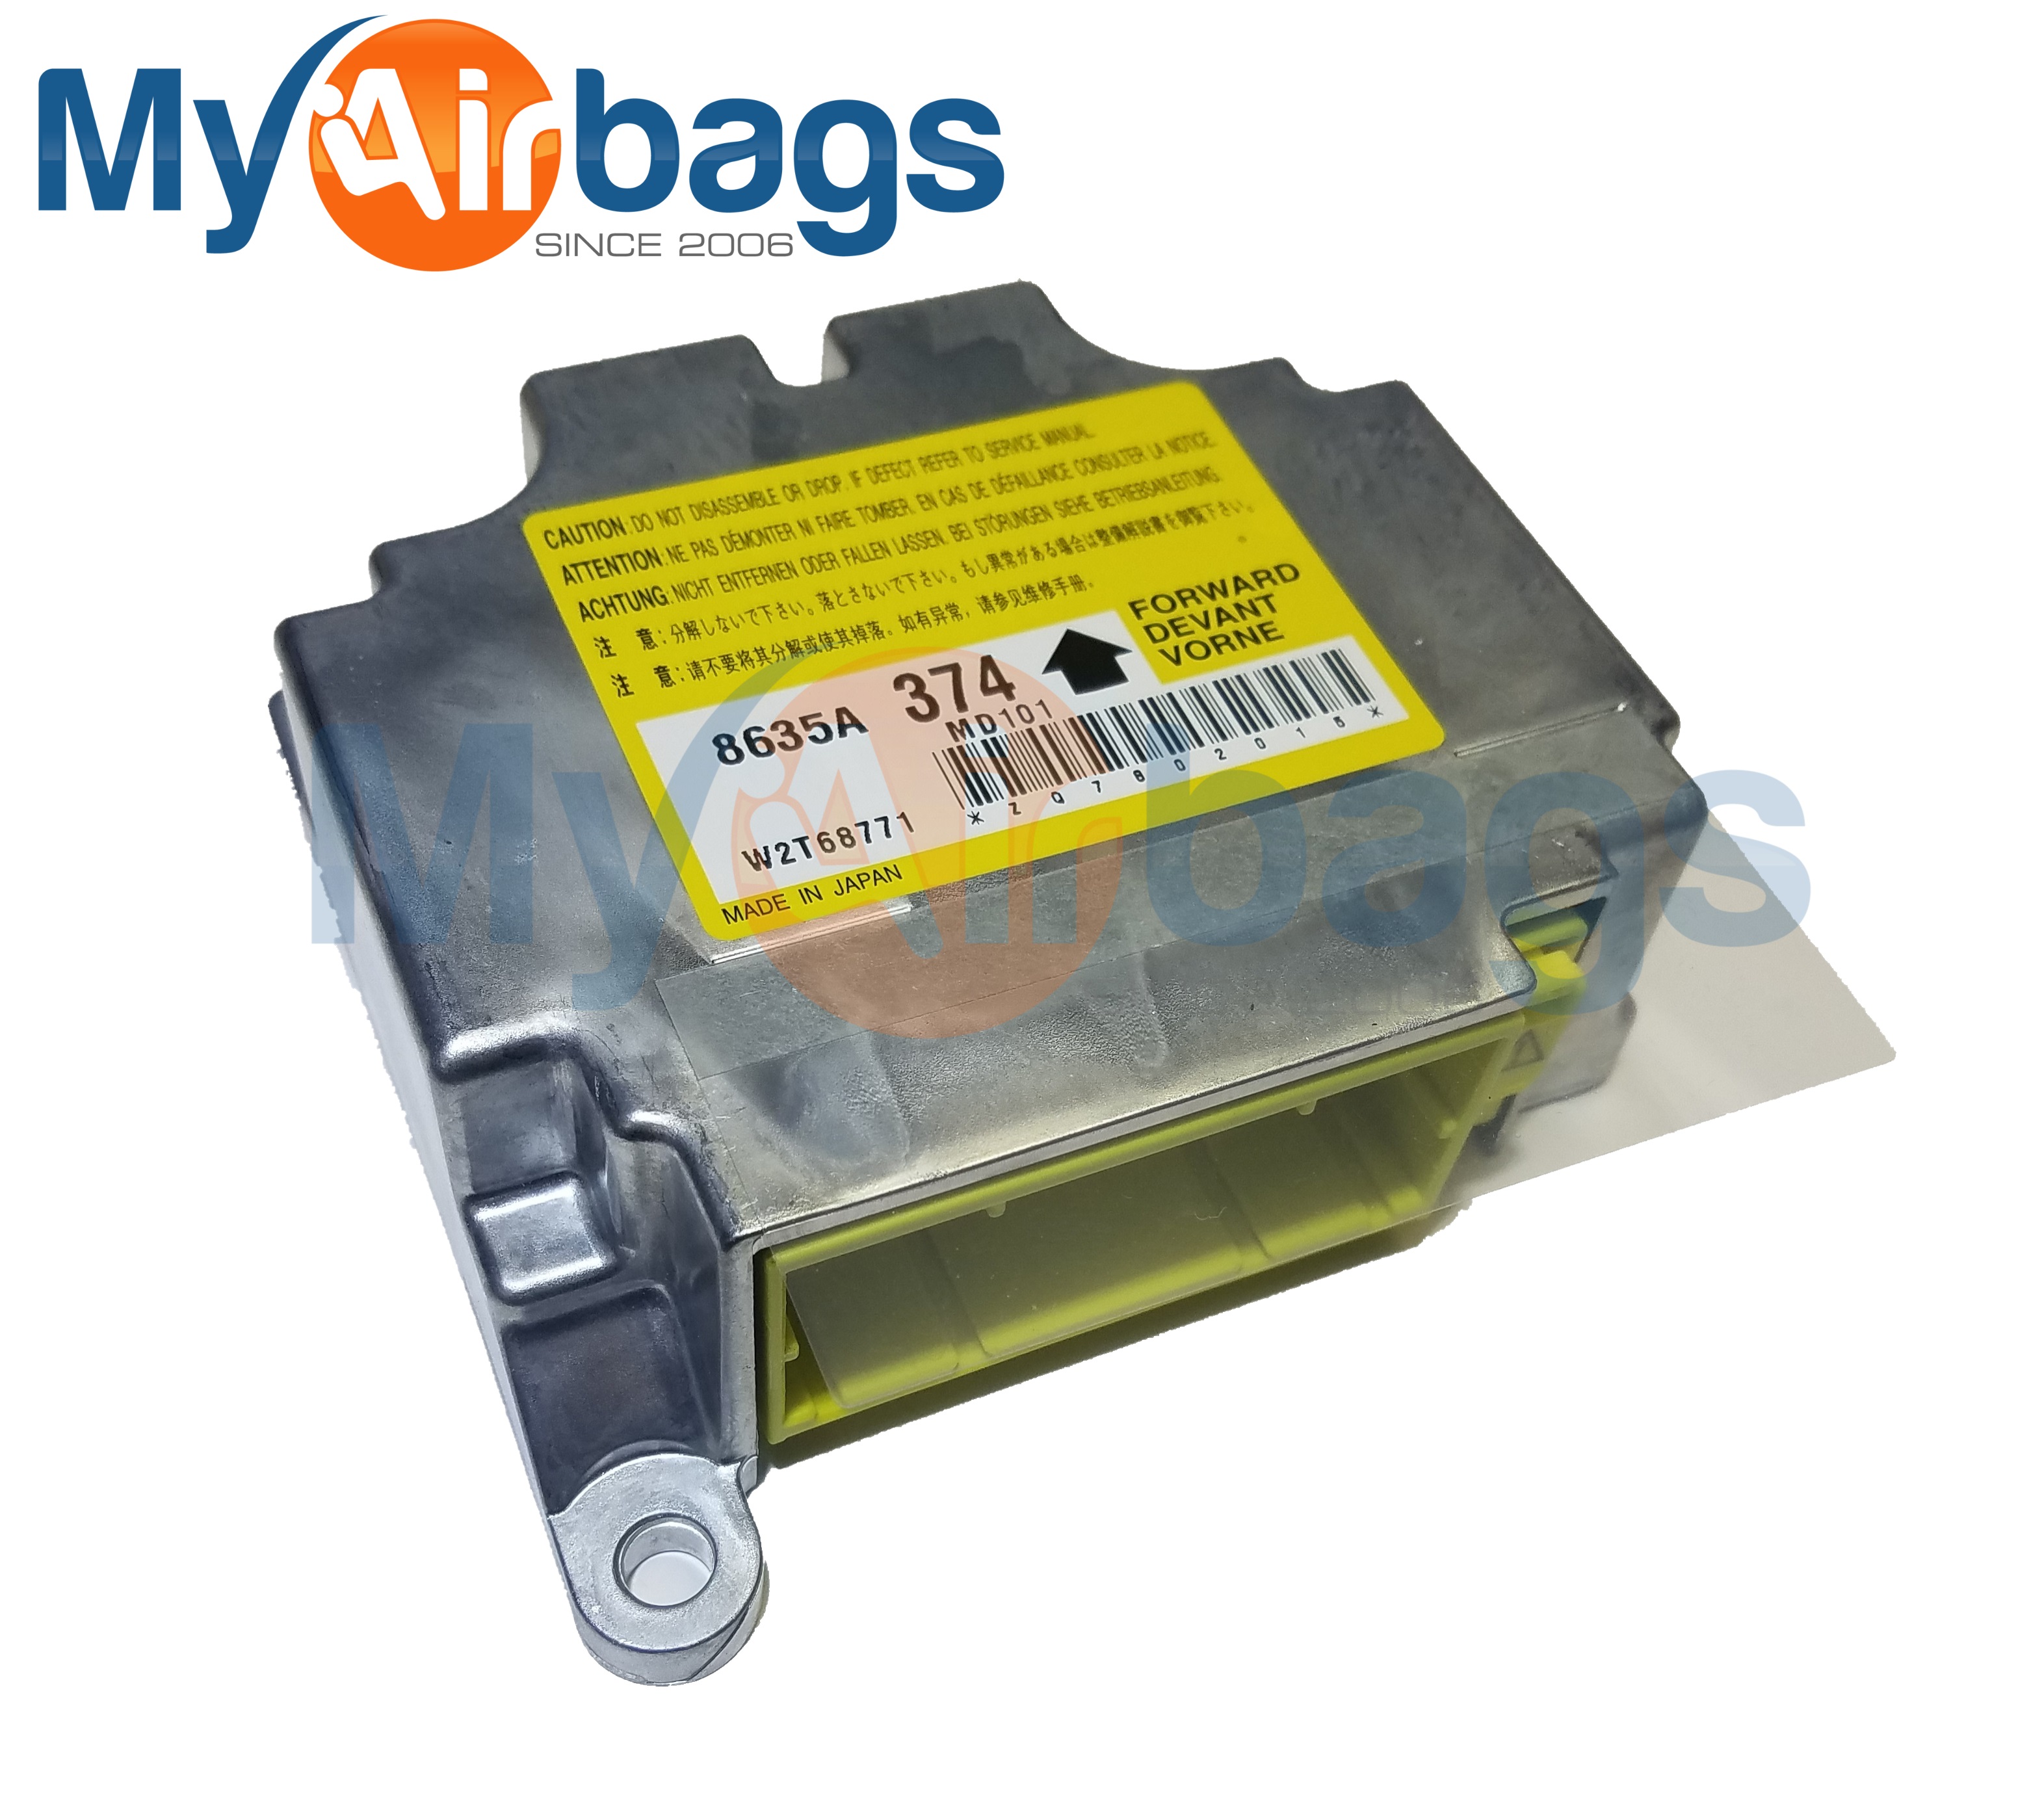 MITSUBISHI MIRAGE SRS Airbag Computer Diagnostic Control Module PART #8635A374